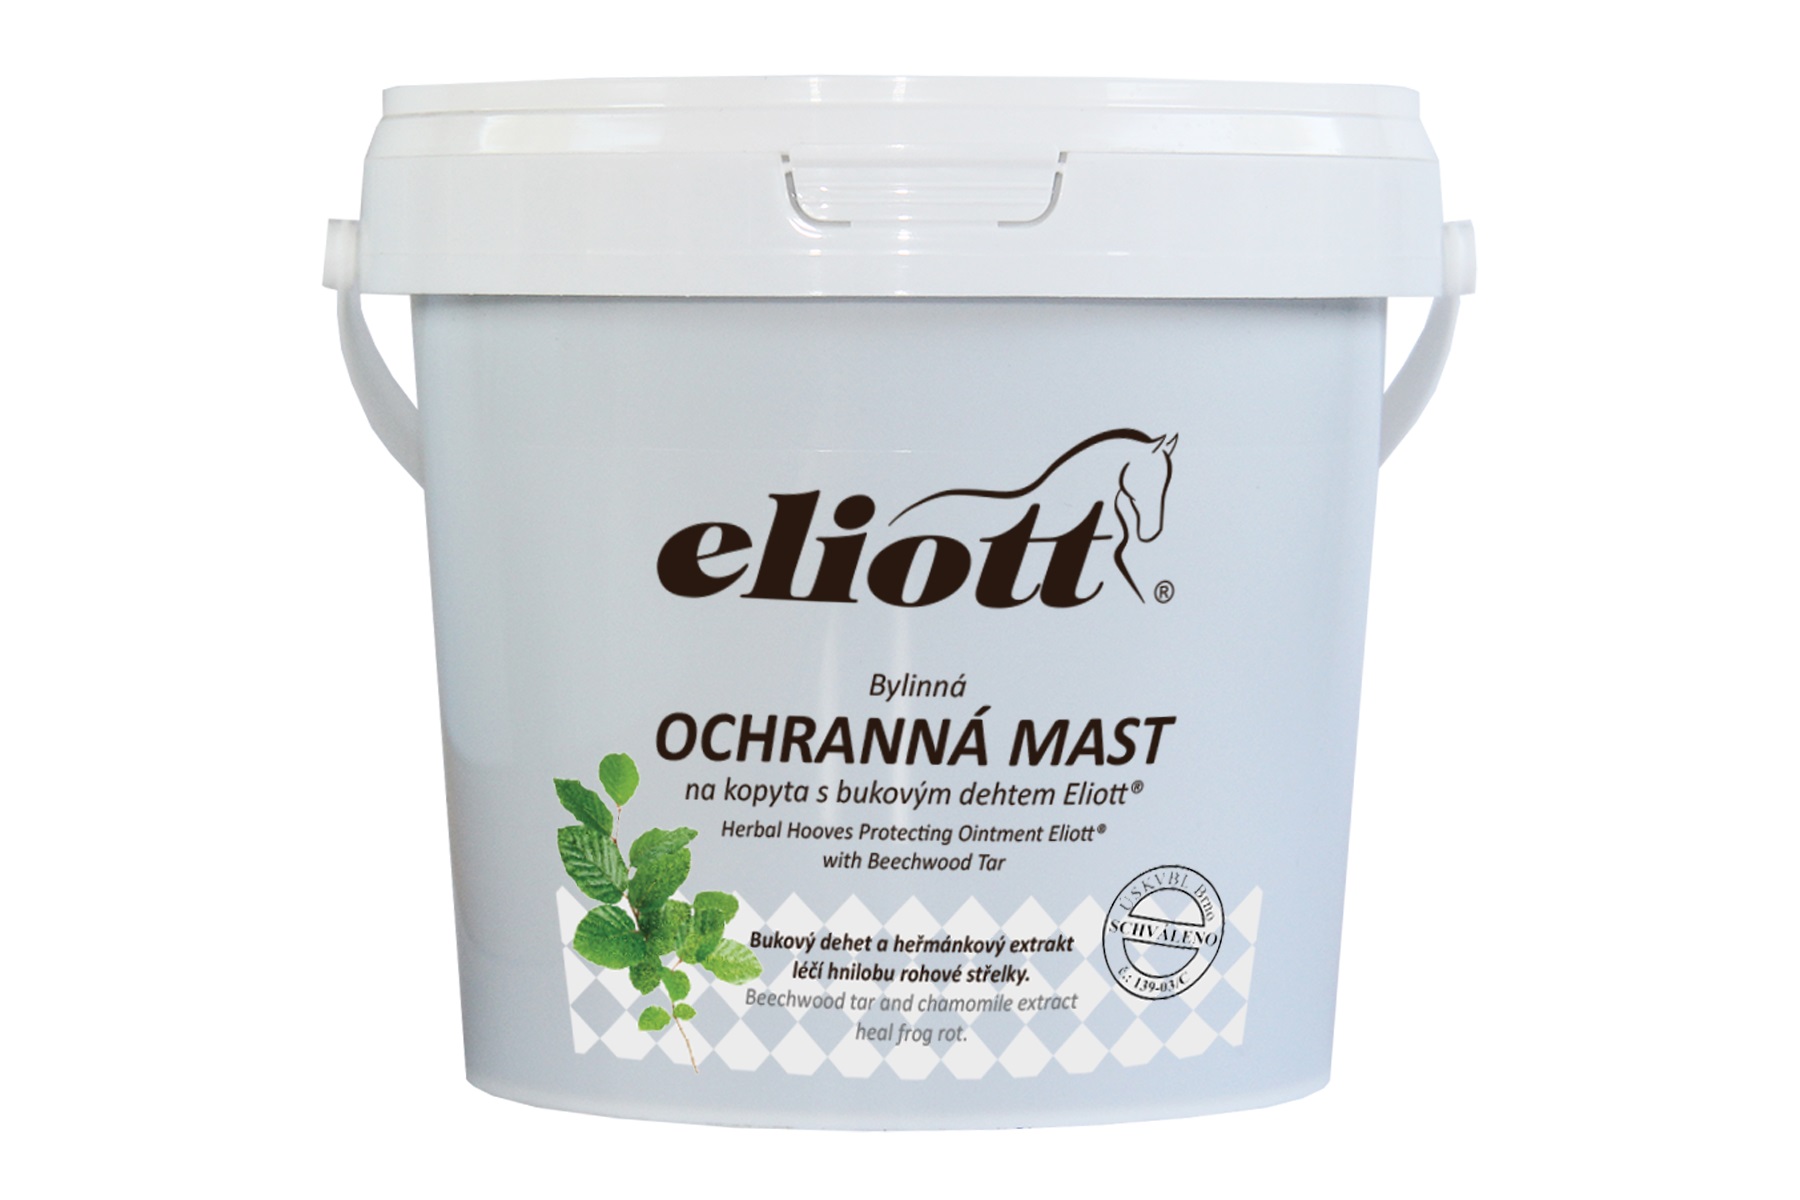 mast na kopyta ELIOTT ochranná bylinná s bukovým dehtem